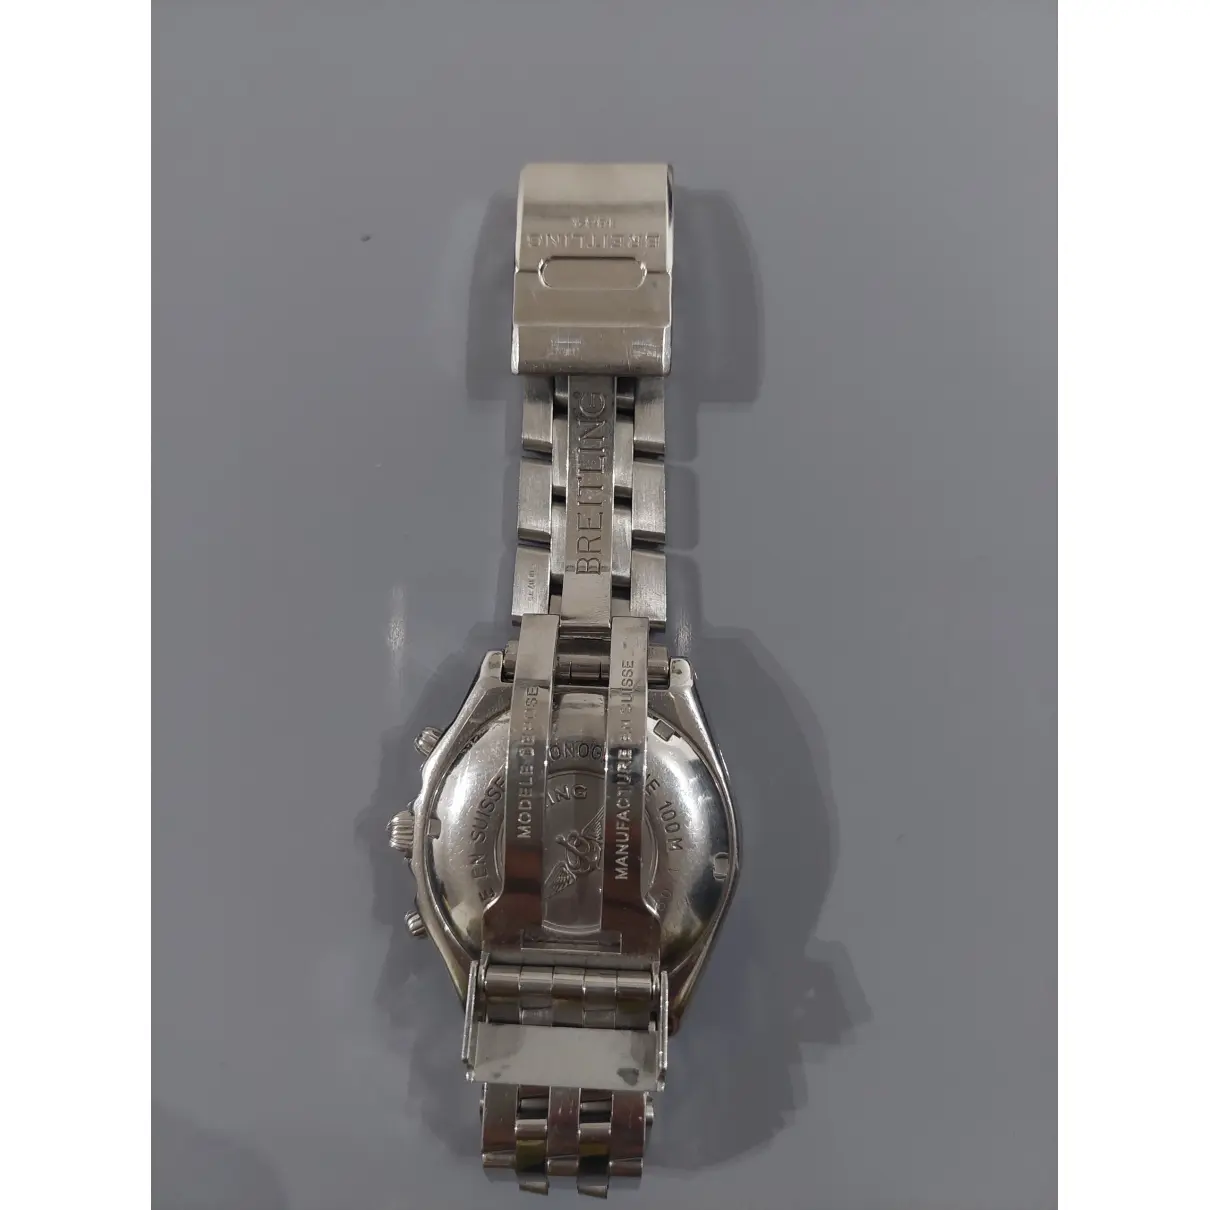 Buy Breitling Chronomat ceramic watch online